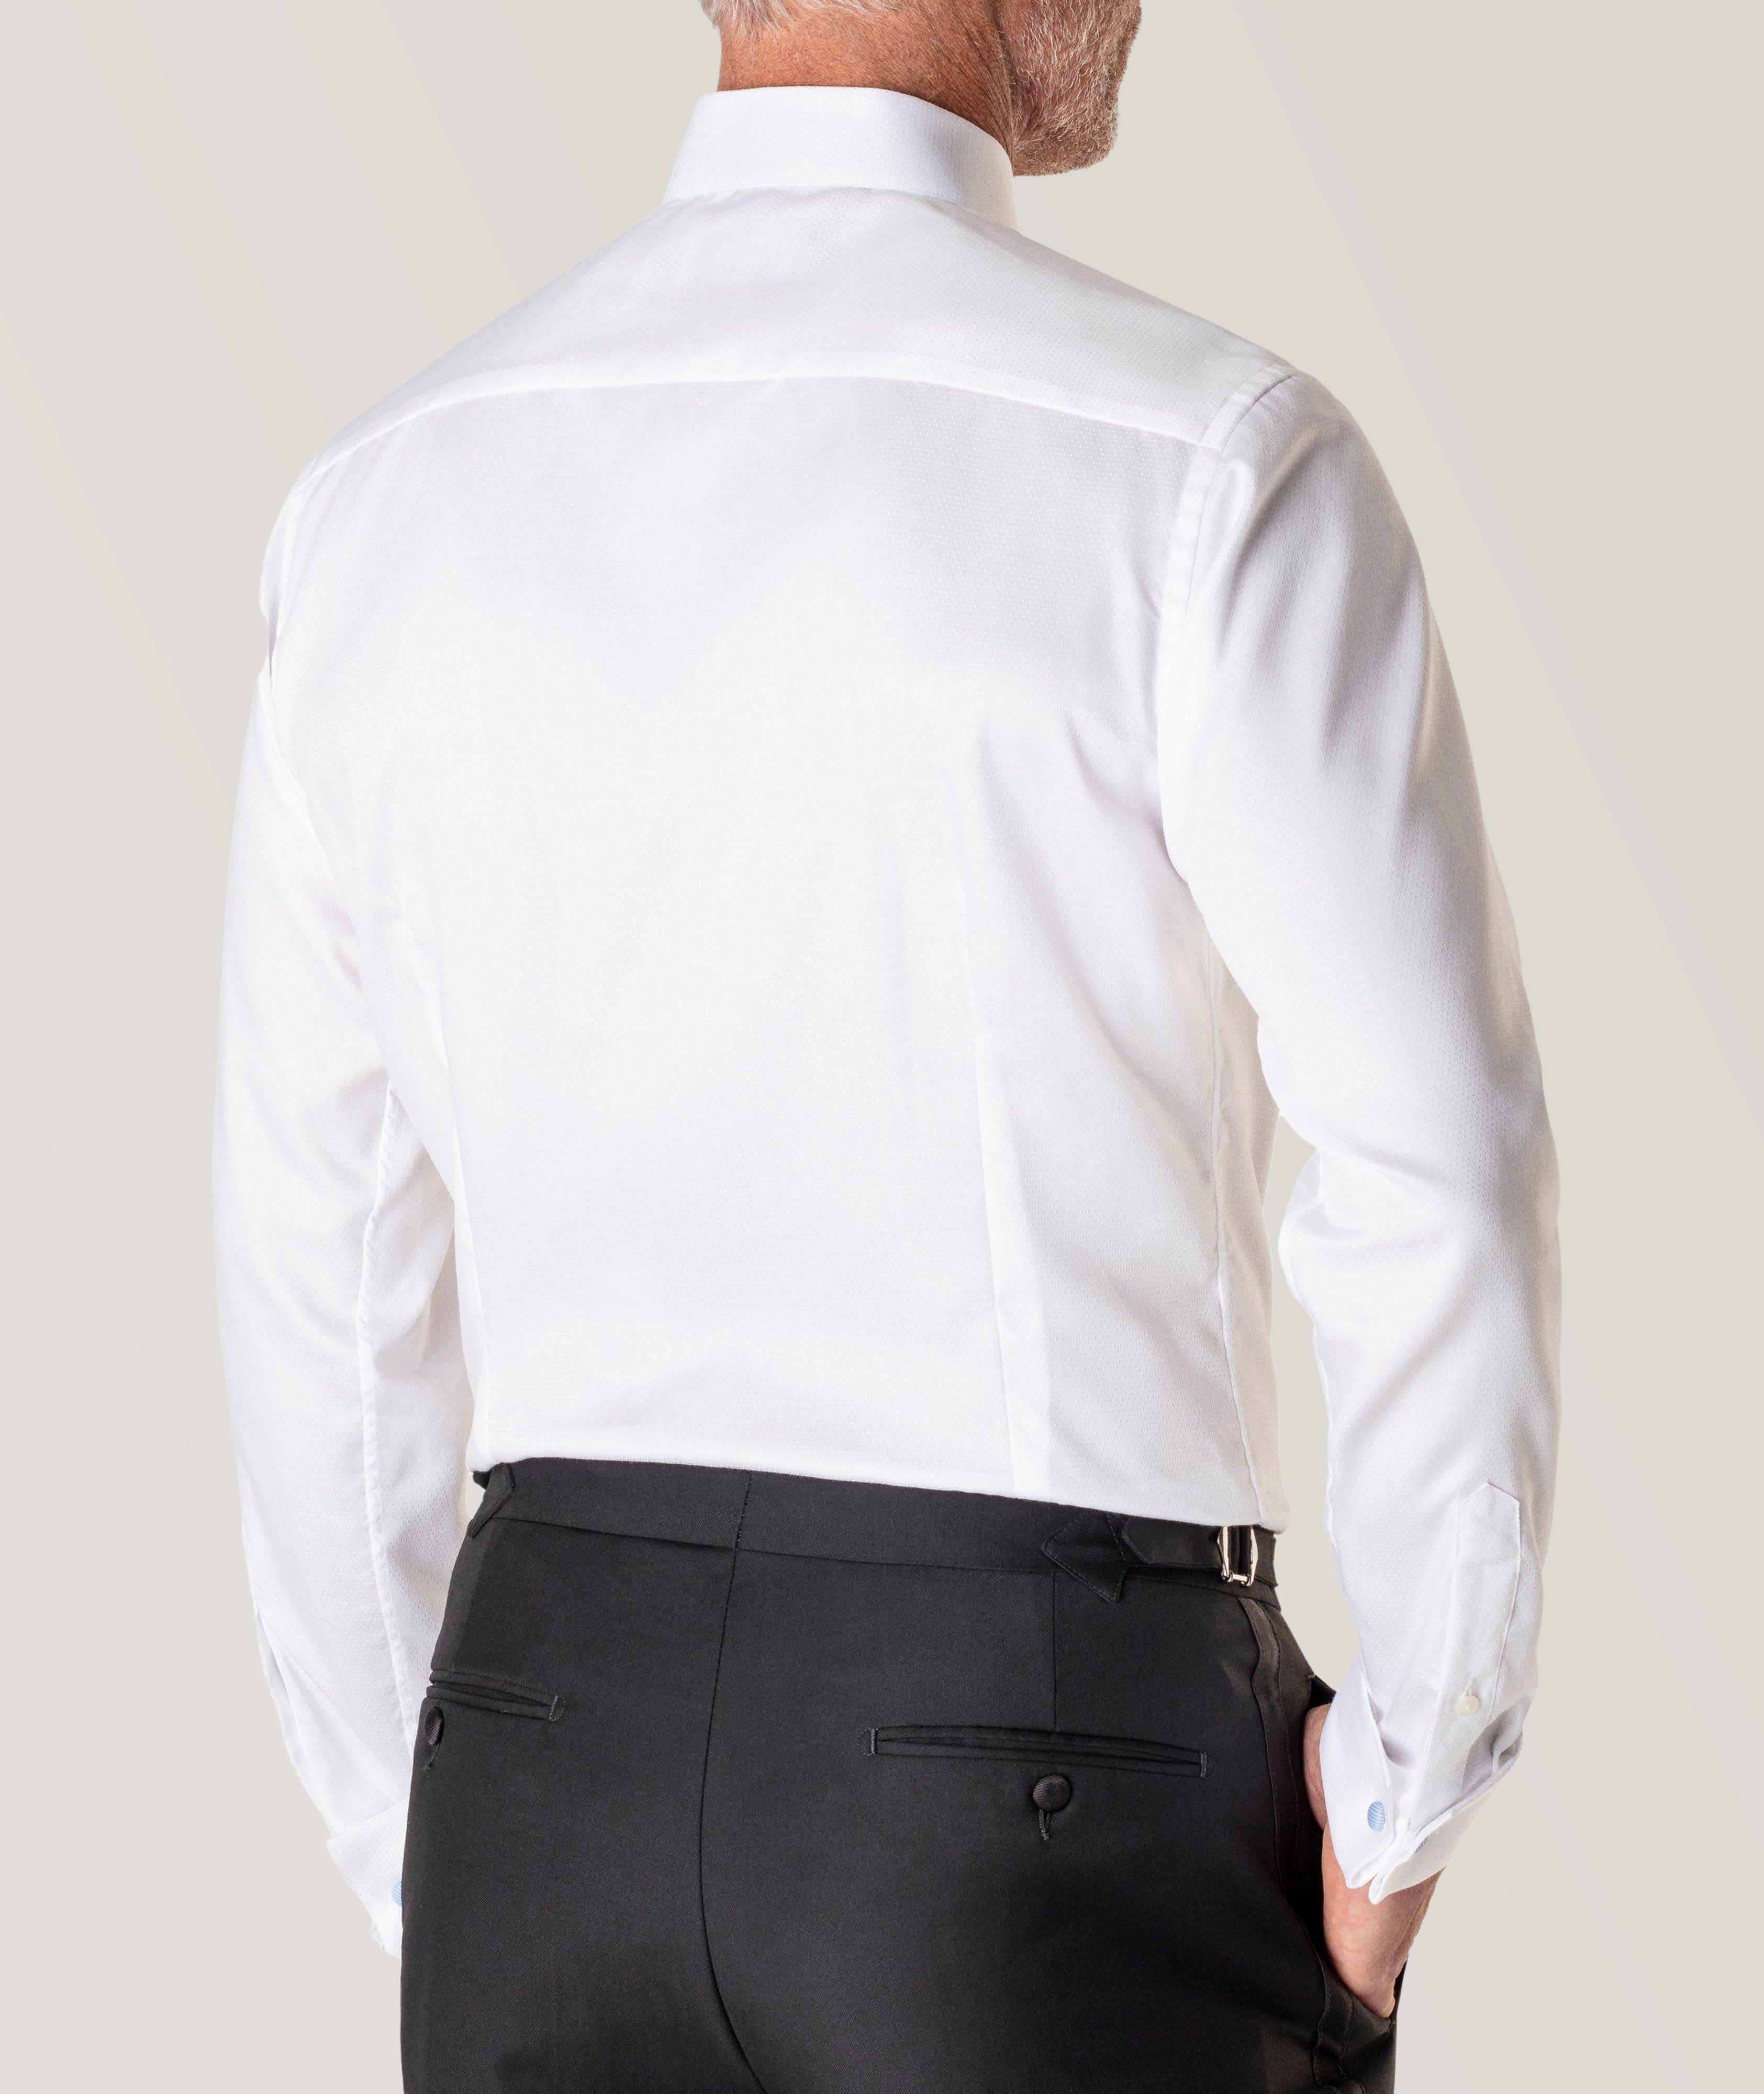 Contemporary-Fit Diamond Weave Tuxedo Shirt  image 2